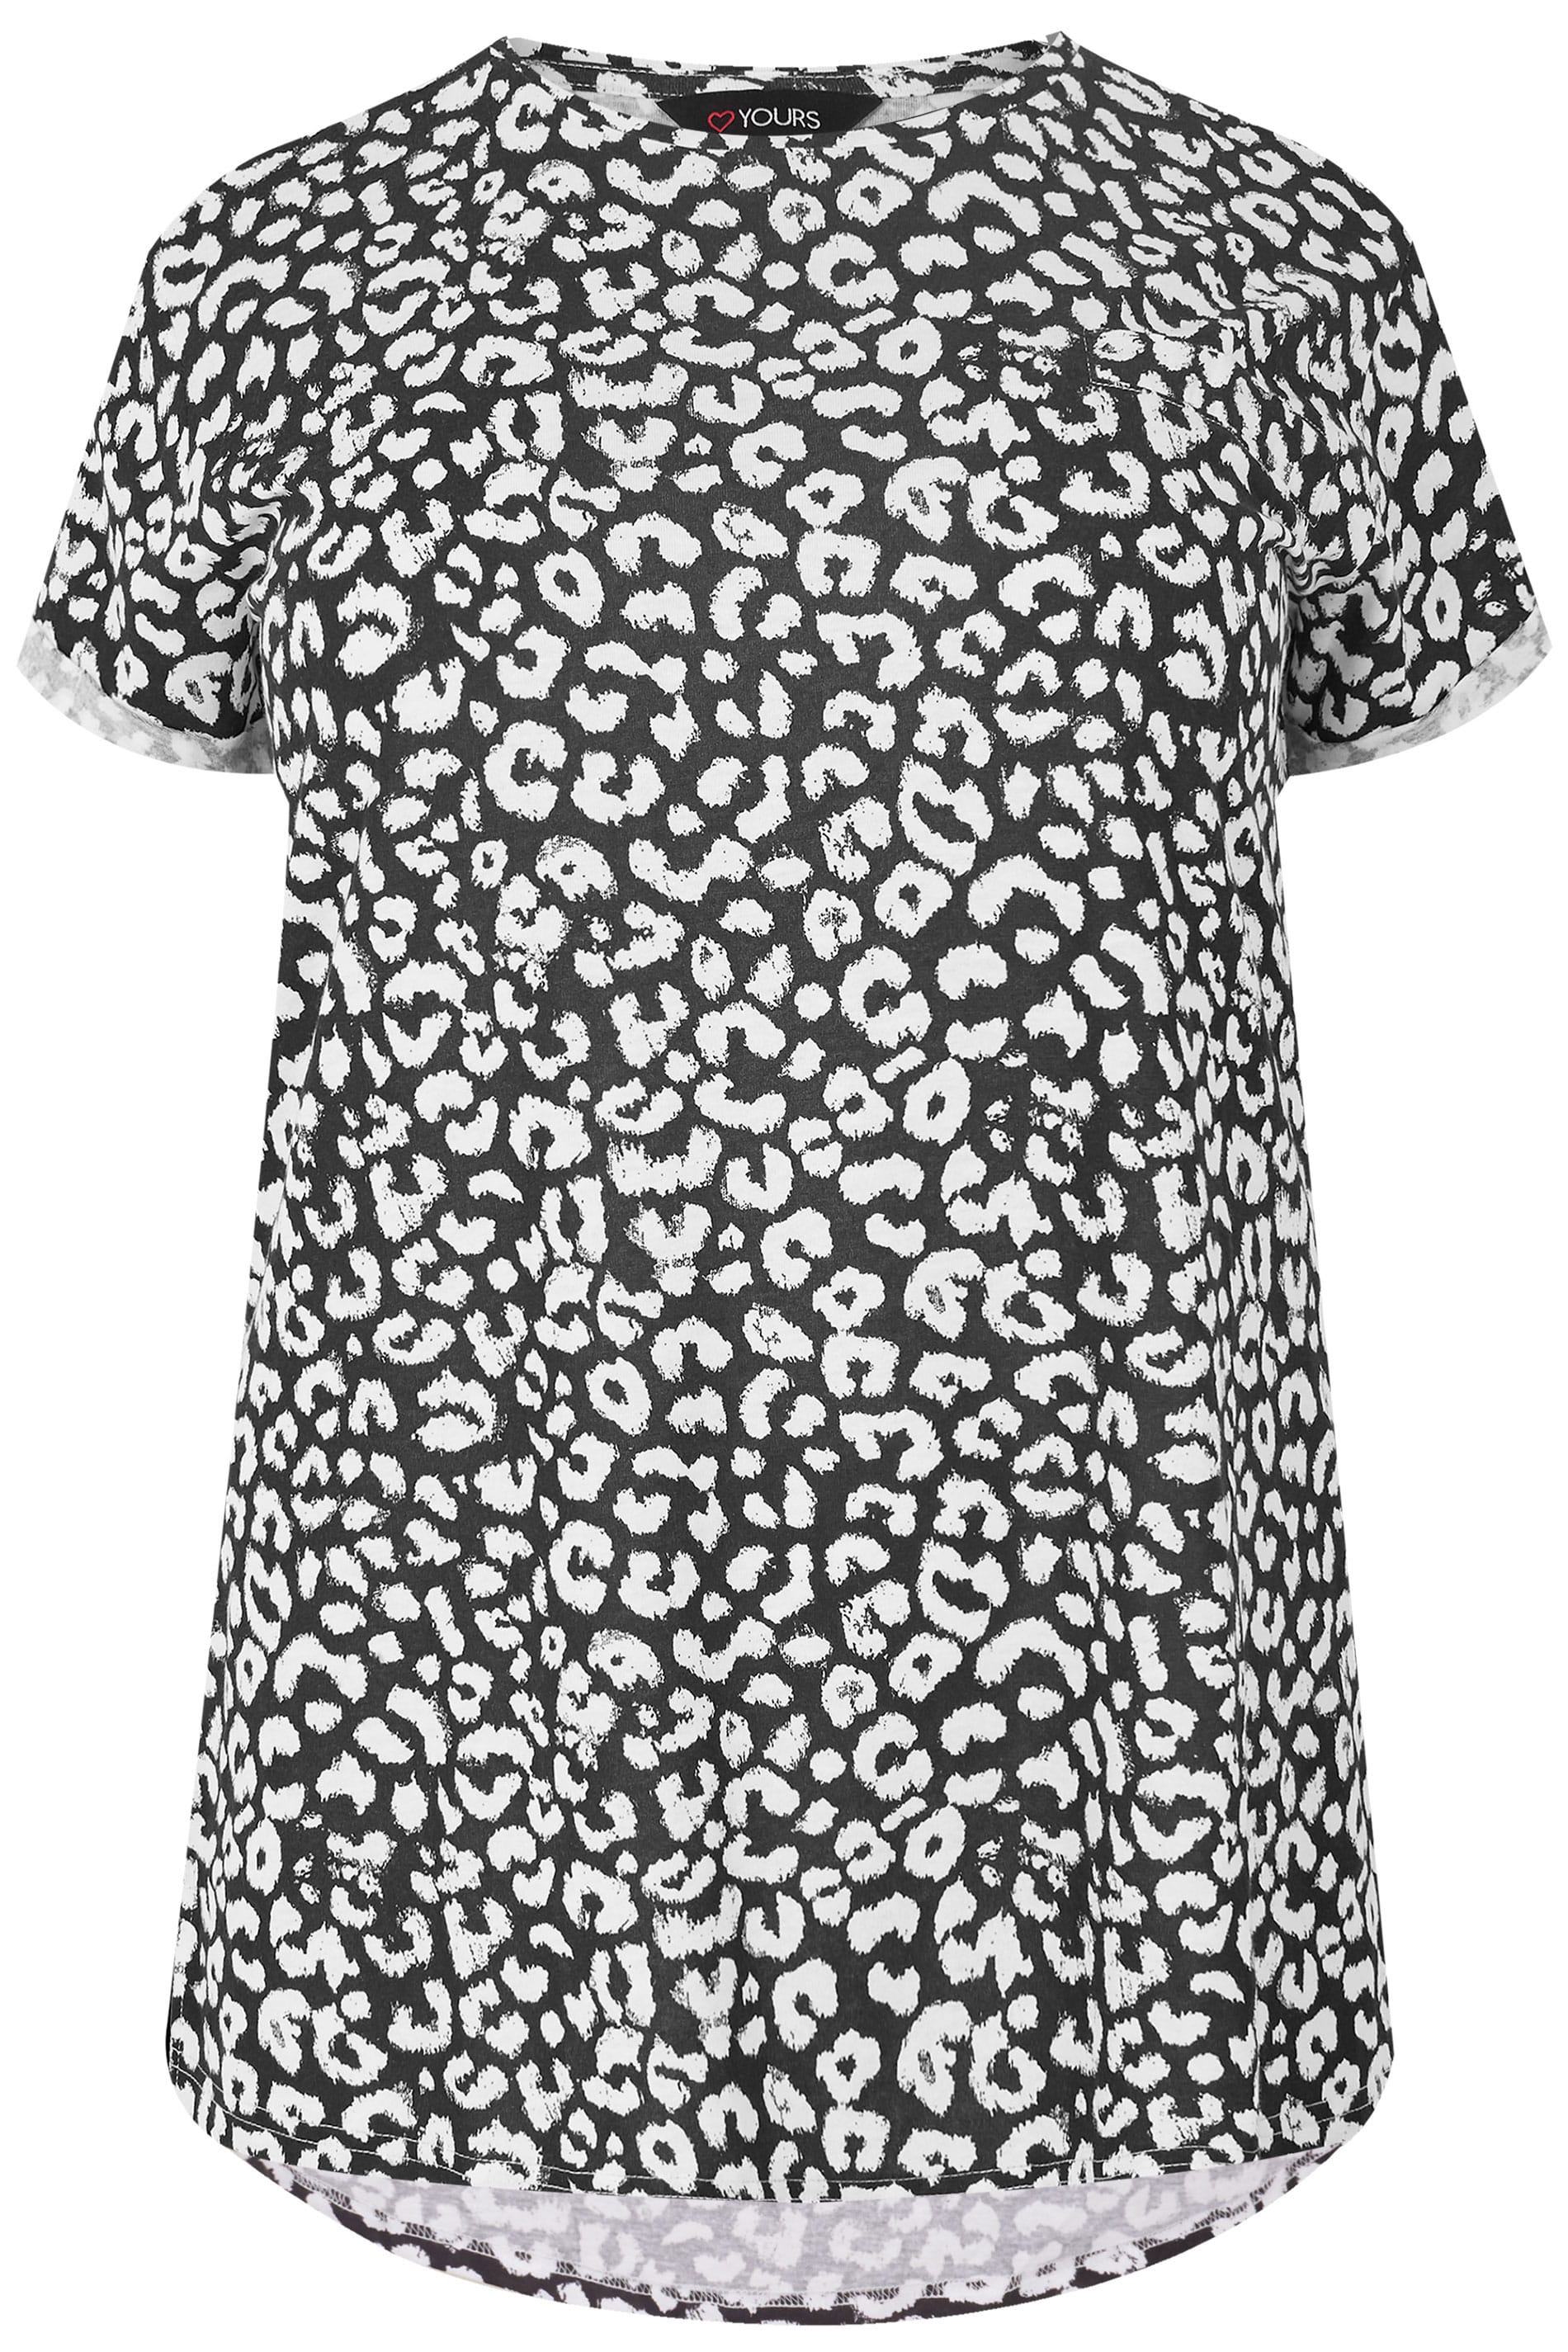 Black & White Animal Pocket T-Shirt, Plus size 16 to 36